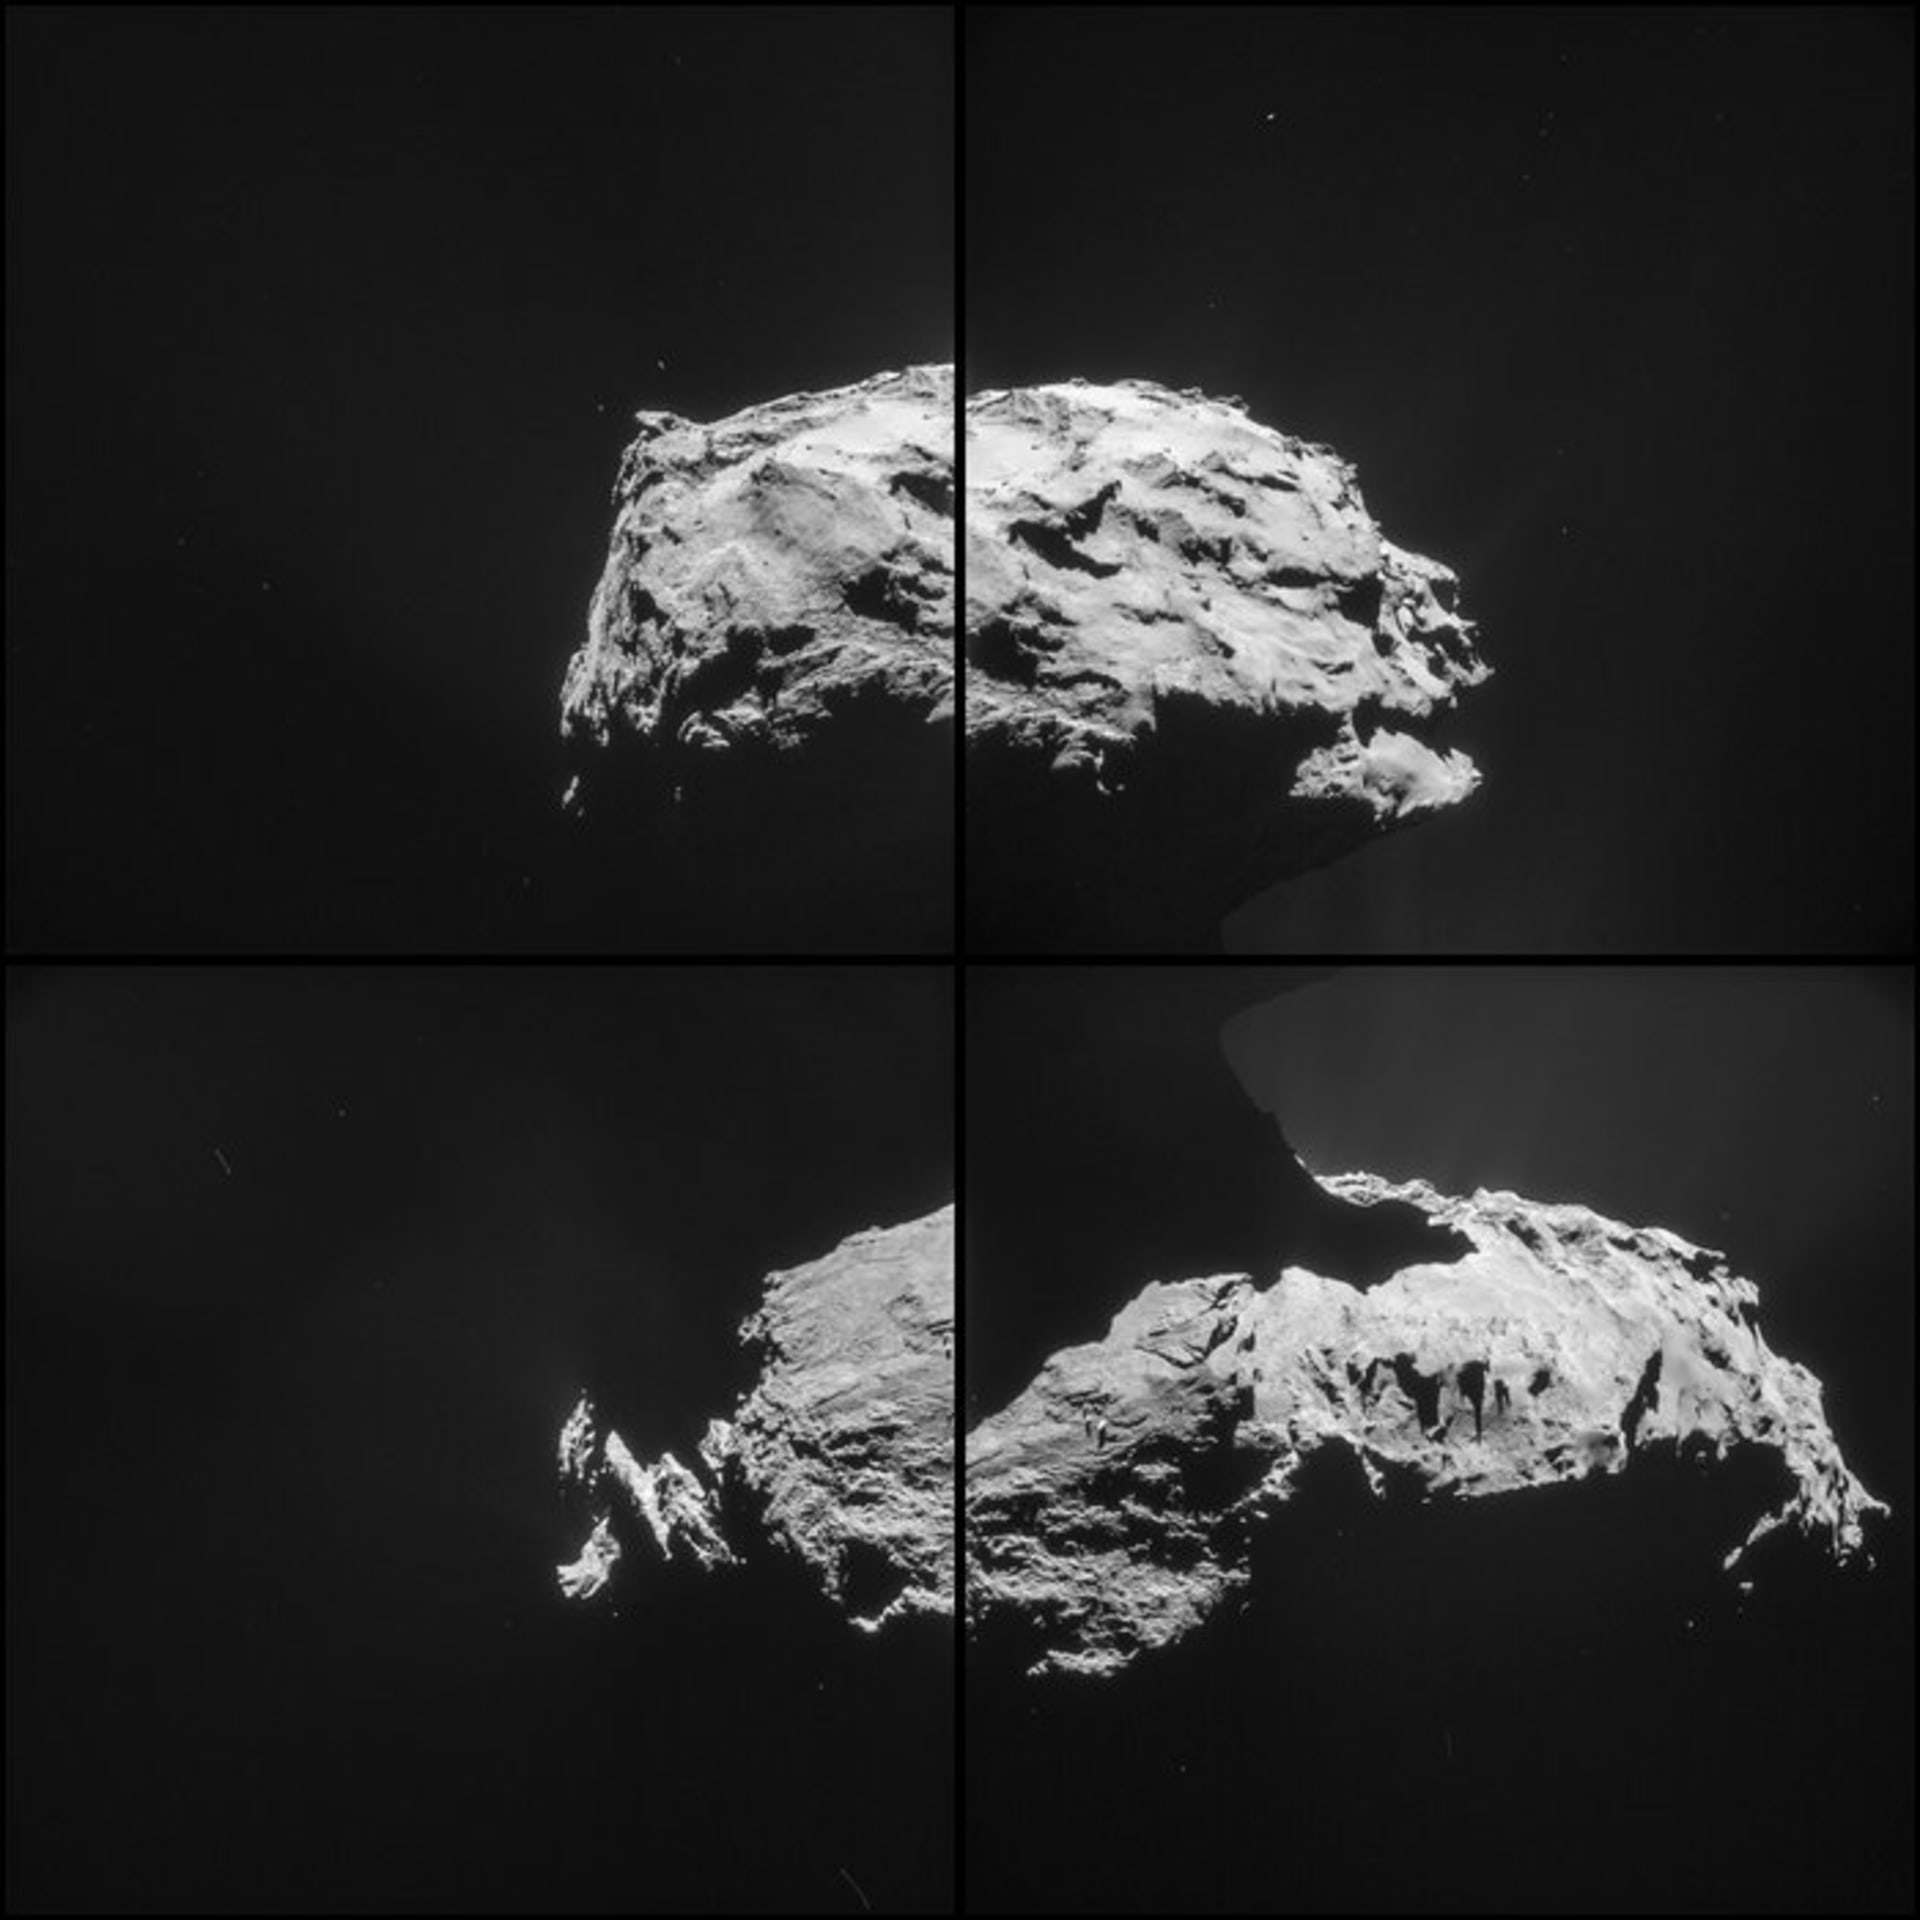 Nejnovější snímky komety Čurjumov Gerasimov - Obrázek 1